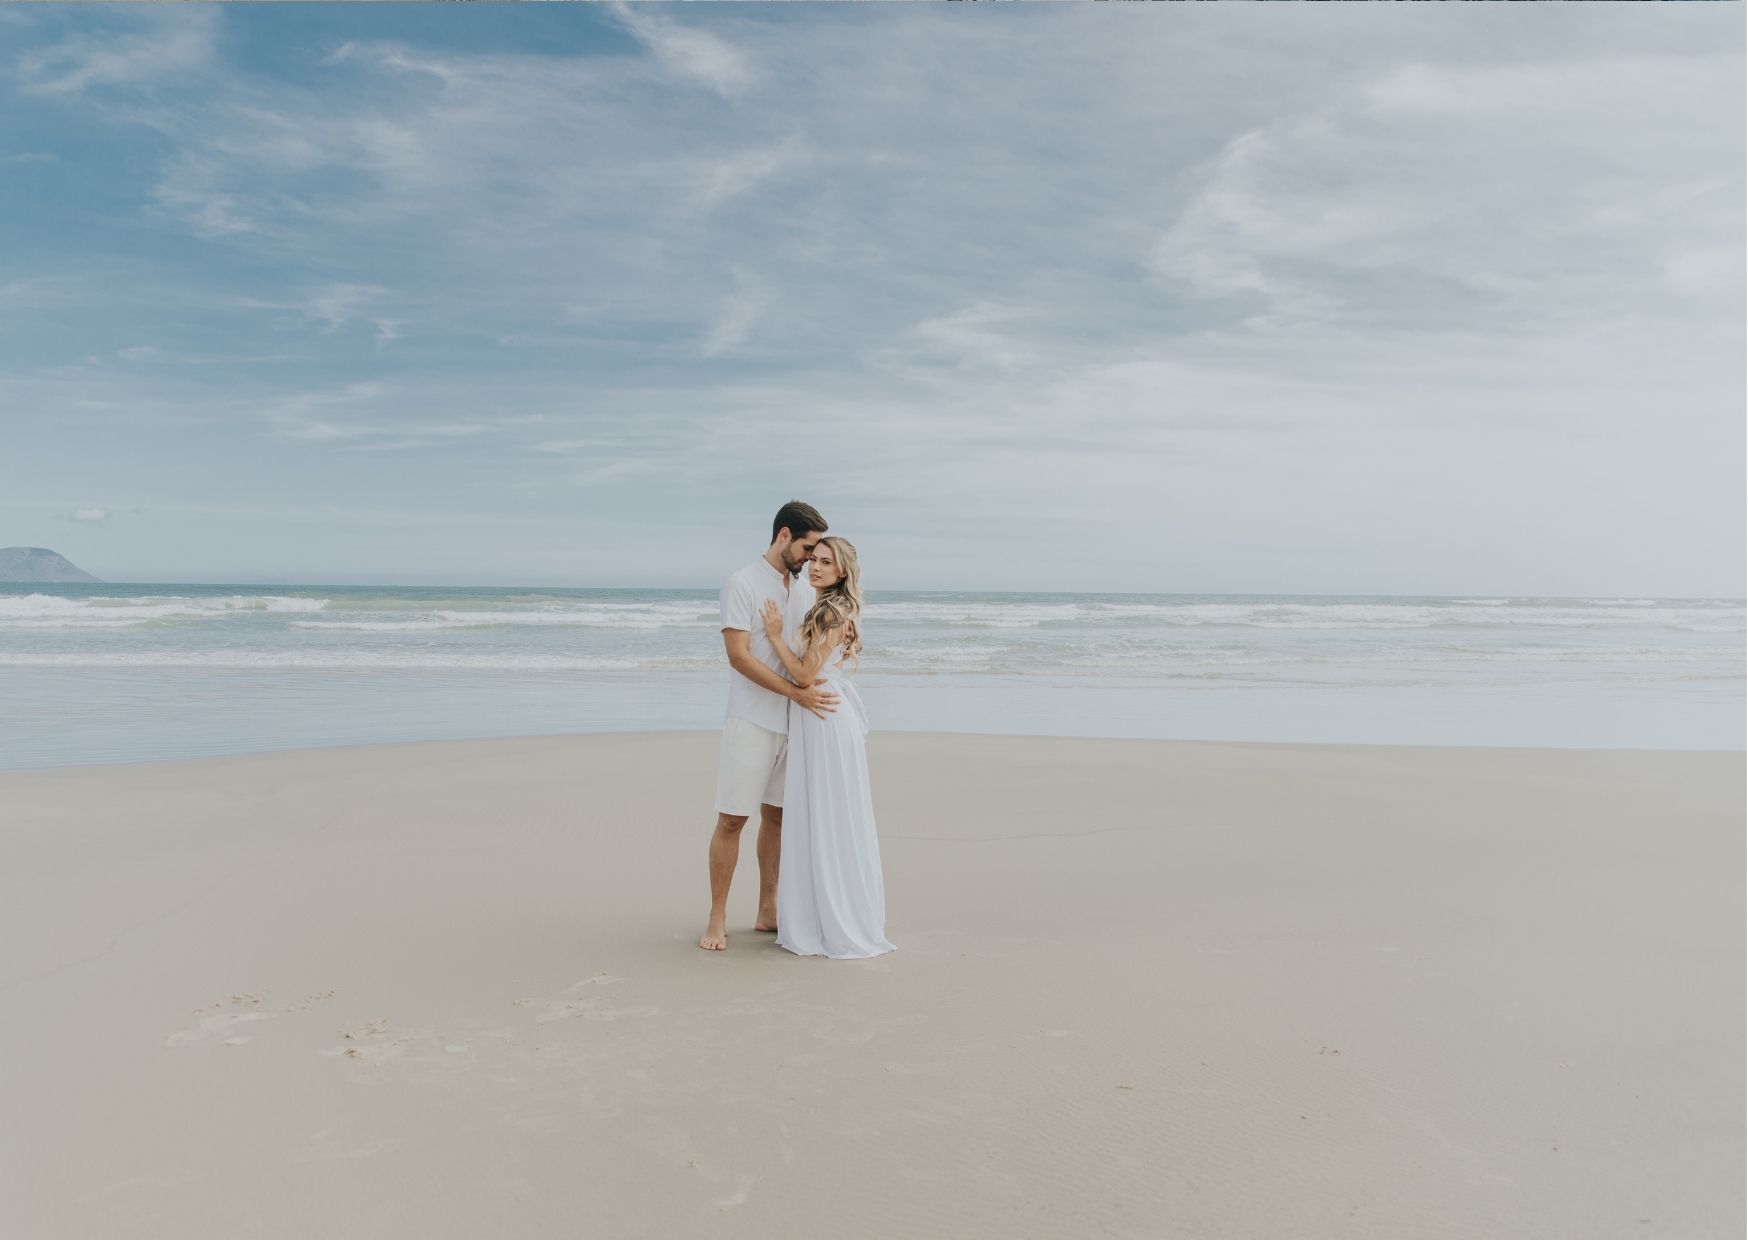 Casal abraçado na praia